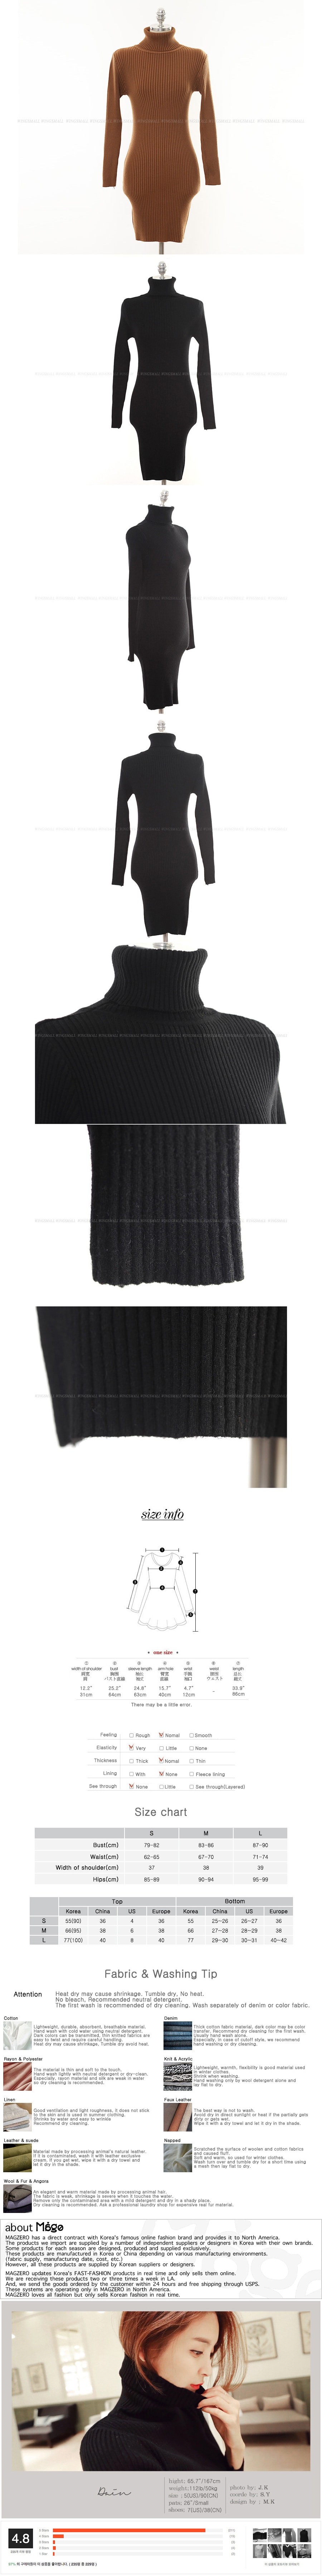 KOREA Turtelneck Ribbed Knit Bodycon Mini Dress Camel One Size(S-M) [Free Shipping]